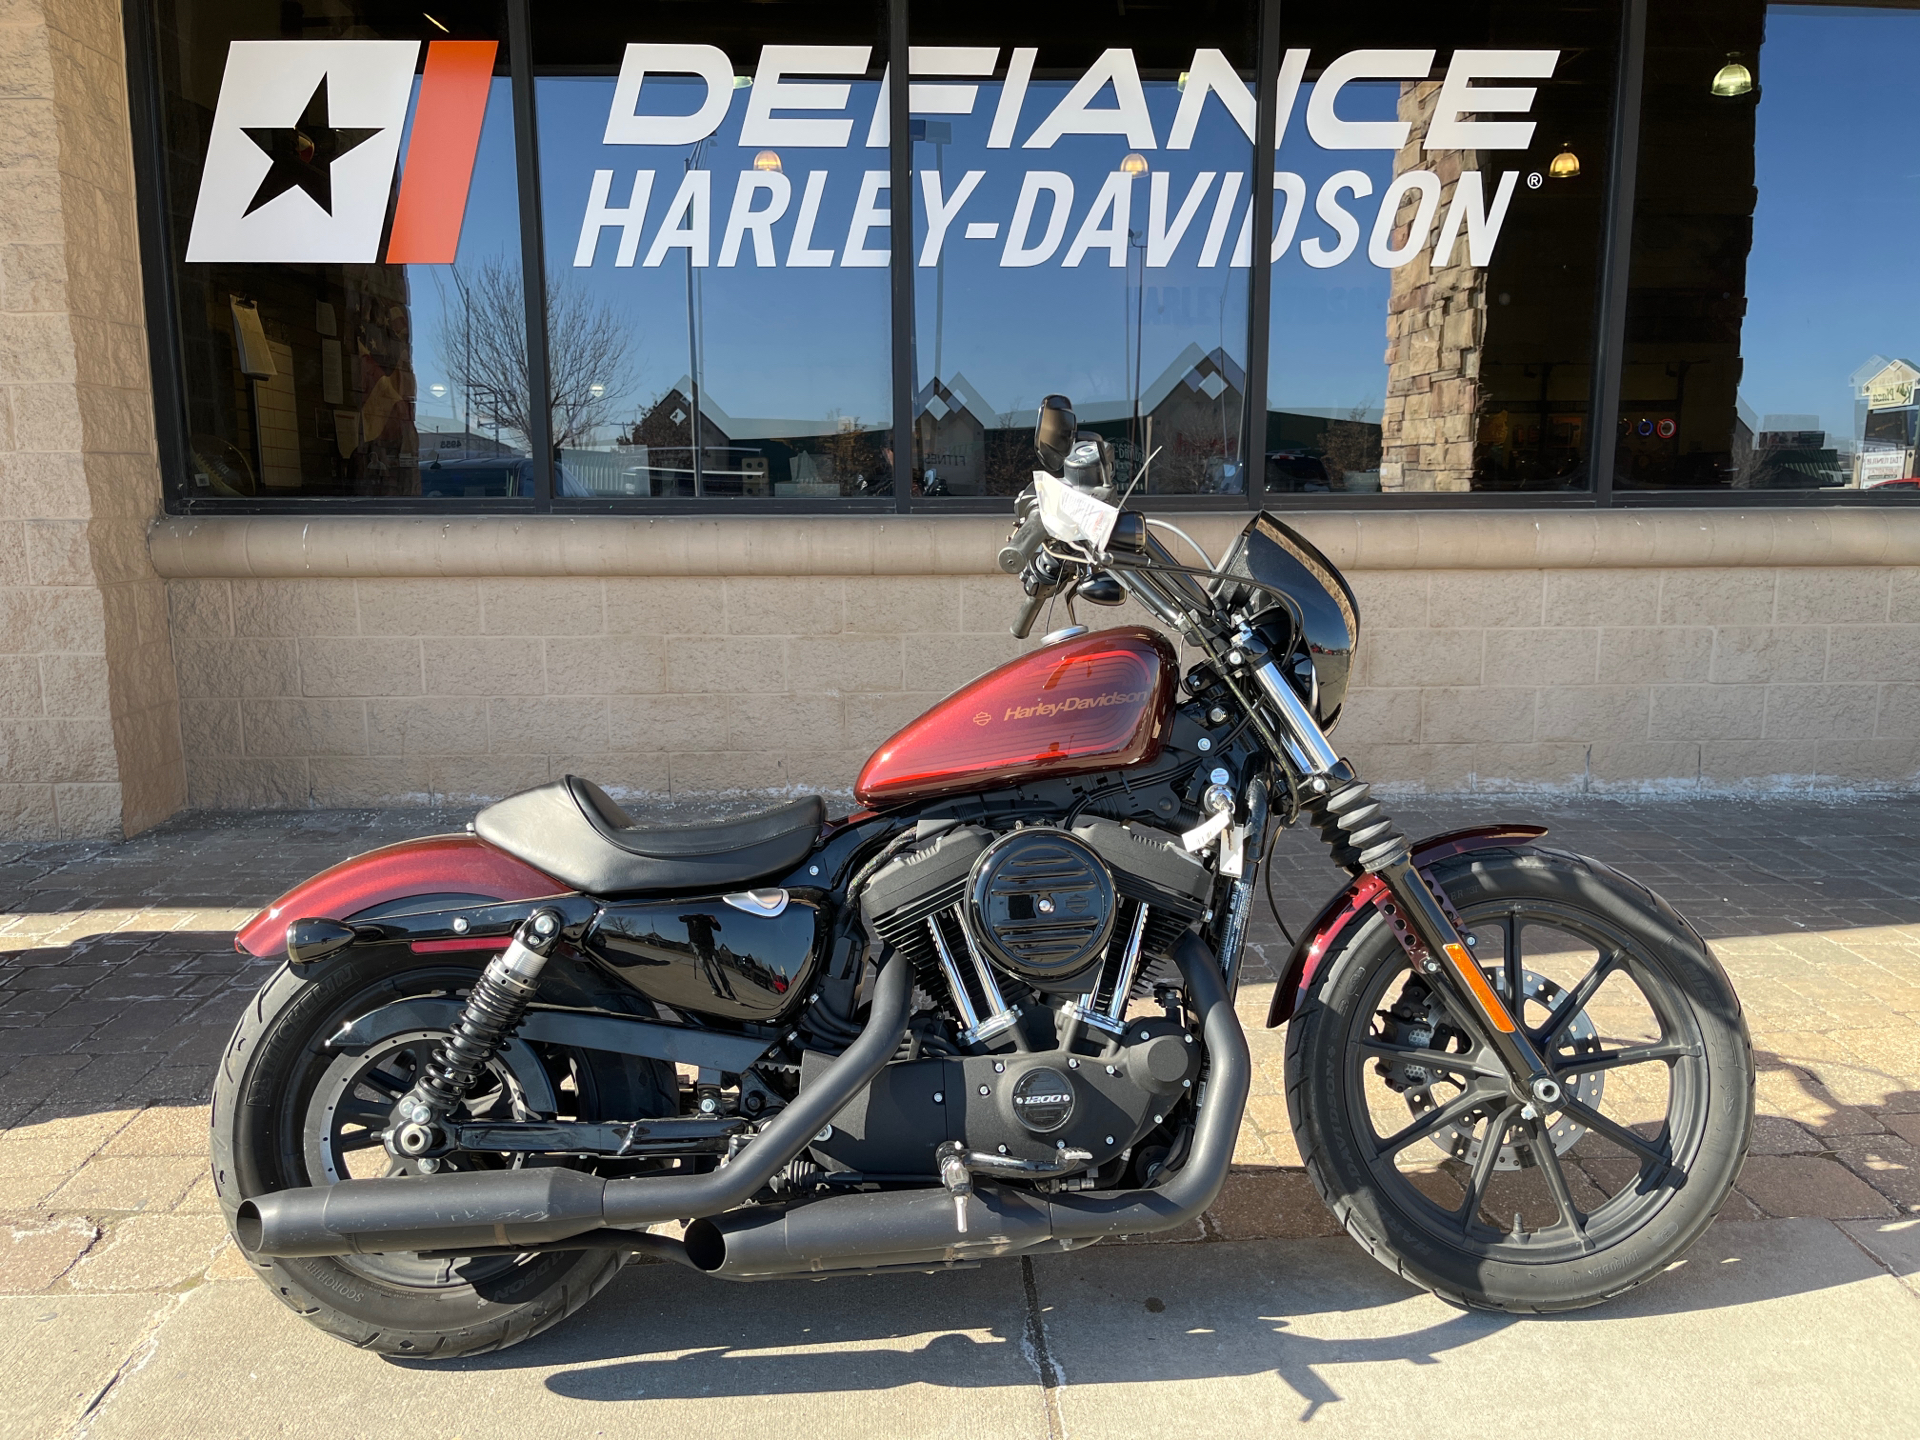 2019 Harley-Davidson Iron 1200™ in Omaha, Nebraska - Photo 1